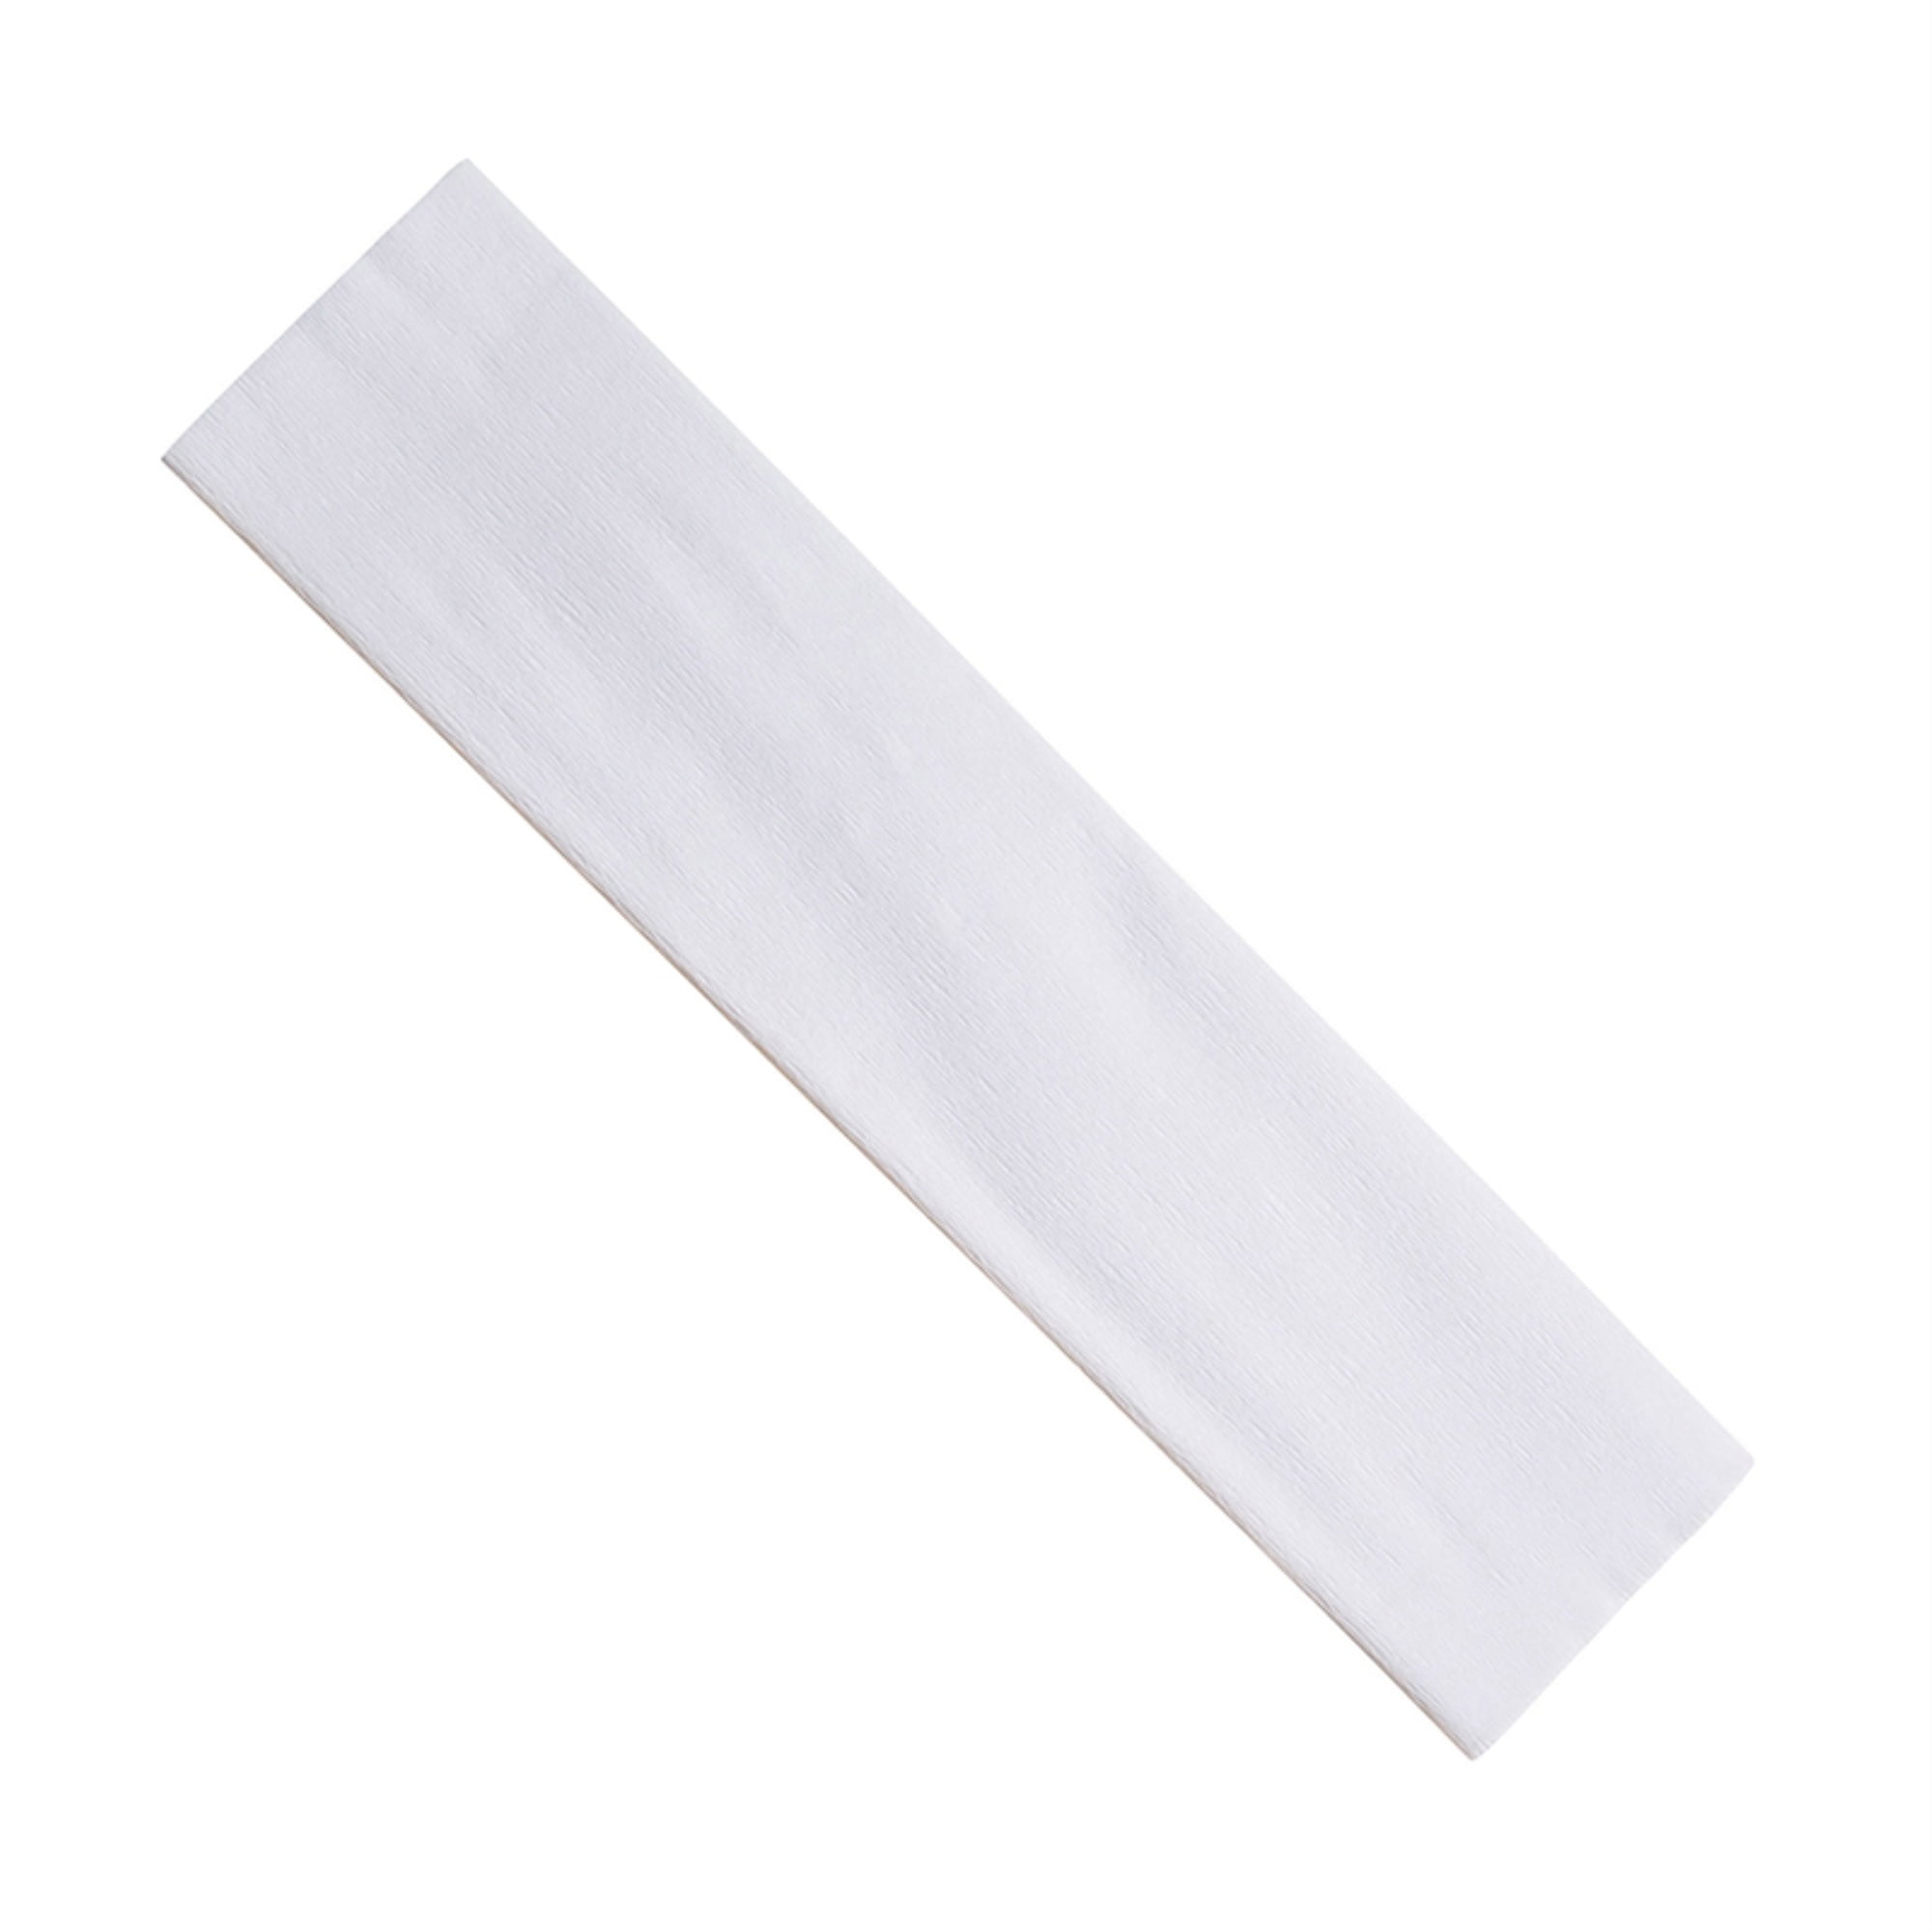 Crepe Paper Roll Crepe Paper Decoration 7.5ft Long 20 Inch Wide, Black